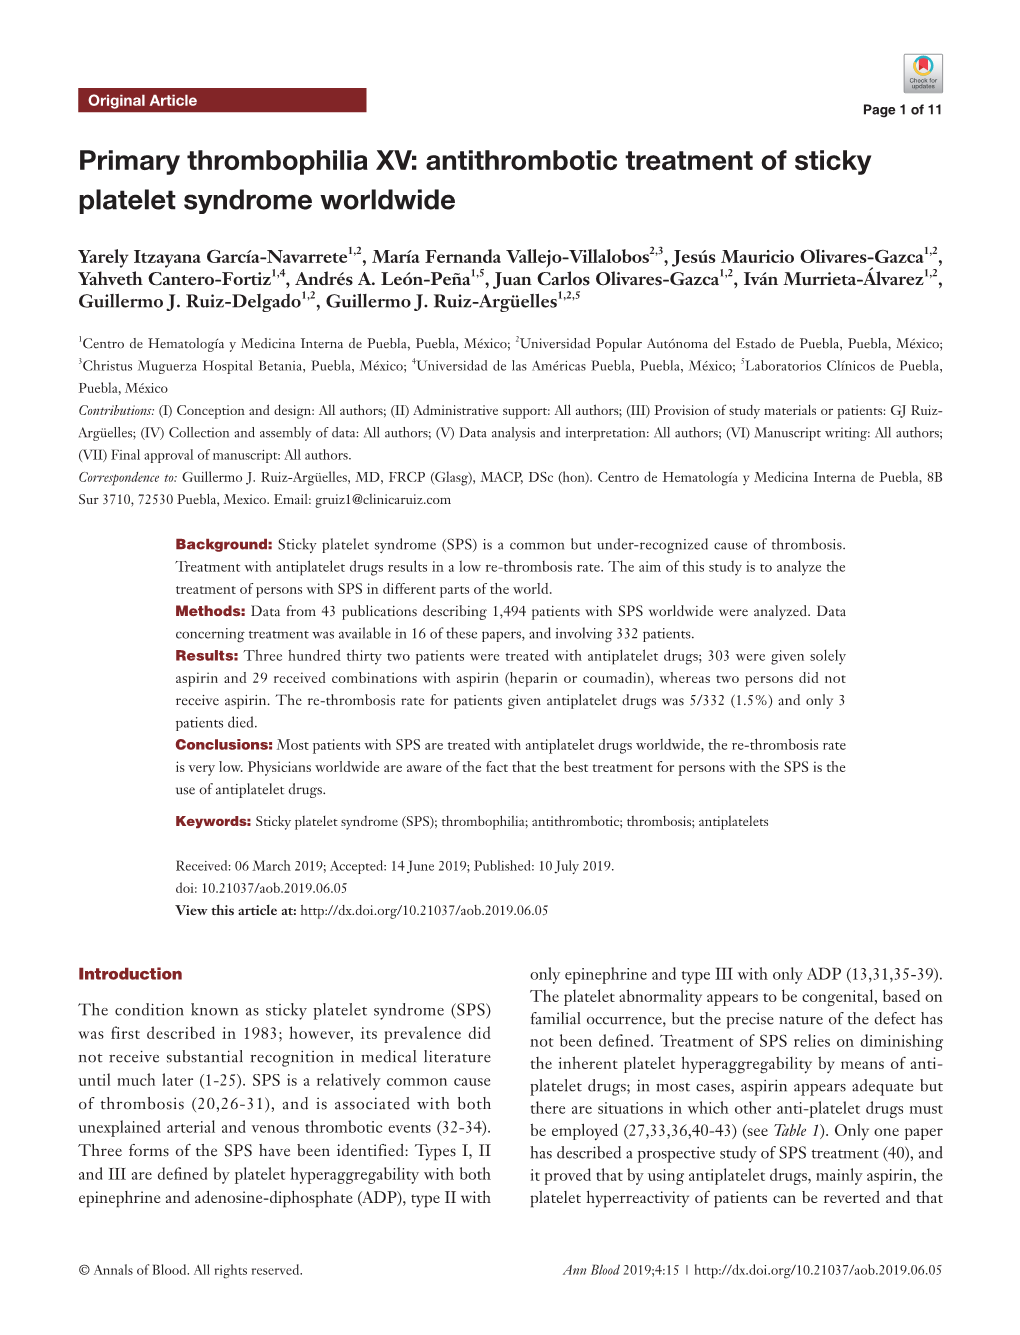 Antithrombotic Treatment of Sticky Platelet Syndrome Worldwide